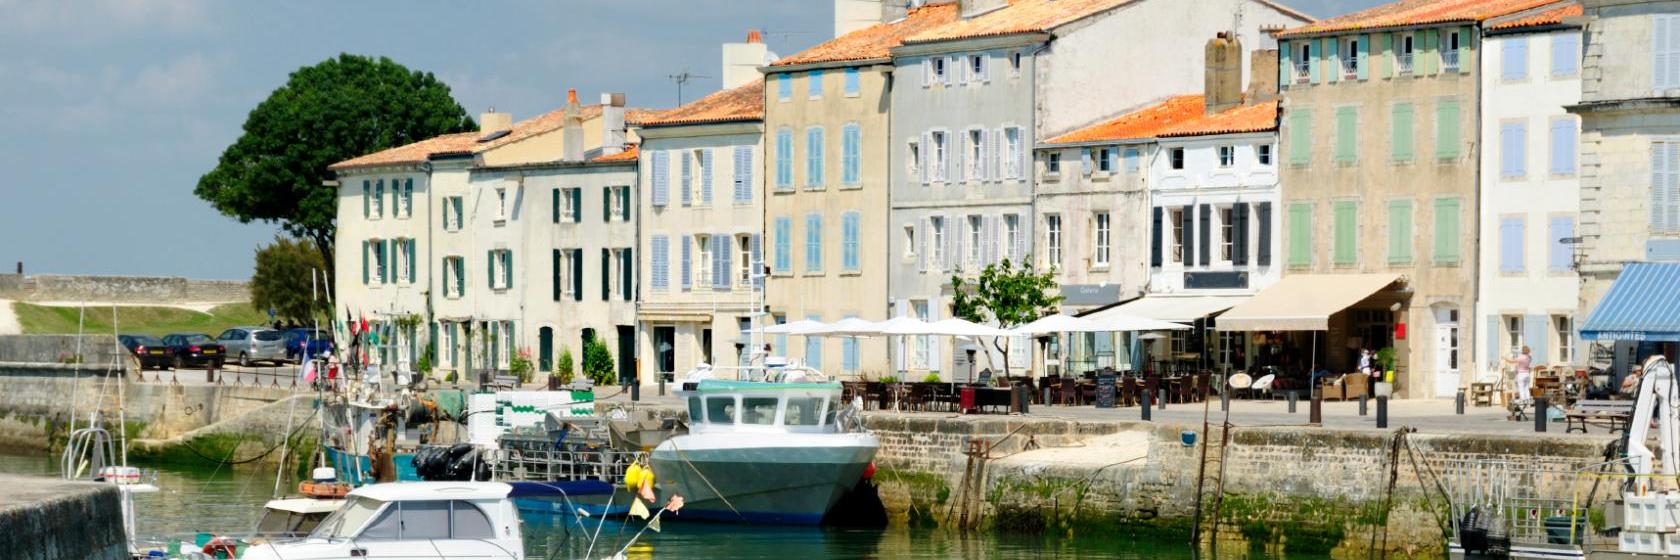 10 Best Saint-Martin-de-Ré Hotels, France (From $63)